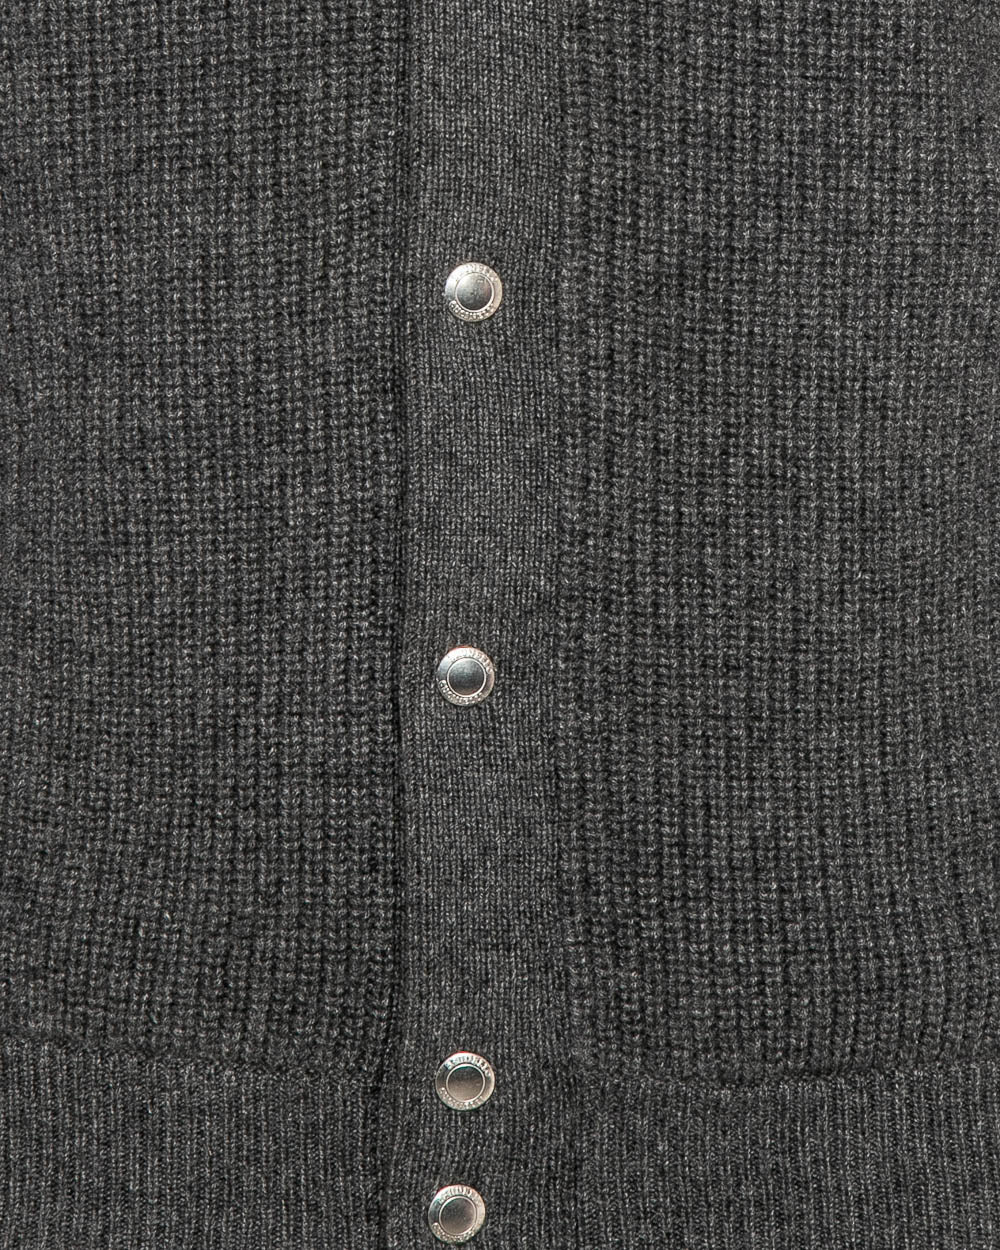 Grey Cashmere Knit Hooded Vest